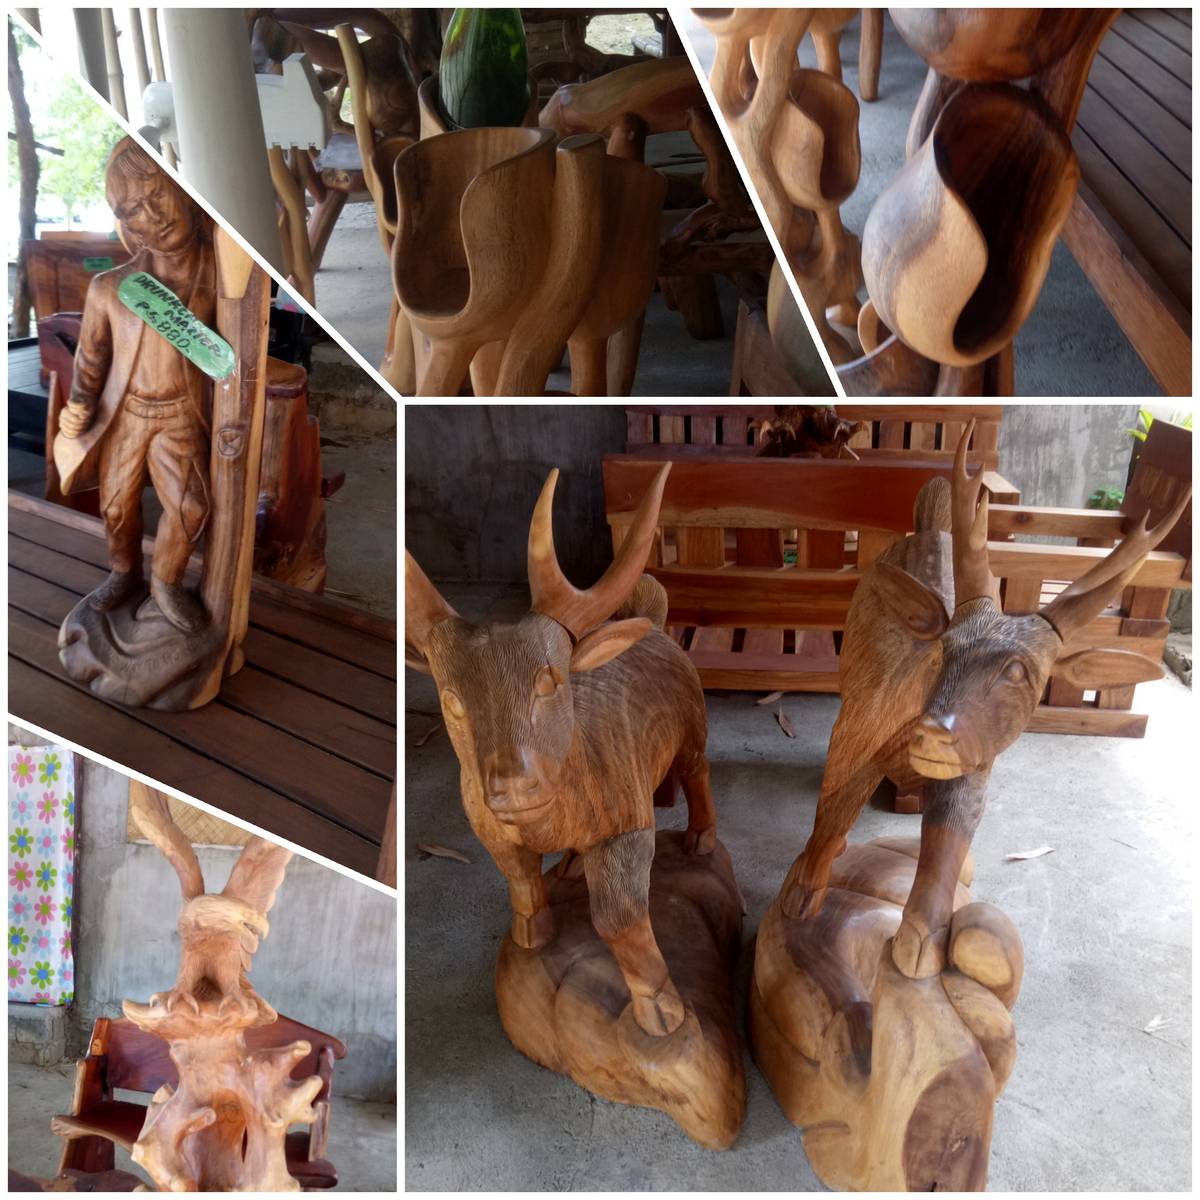 Wood crafts made by Ilocano artist.